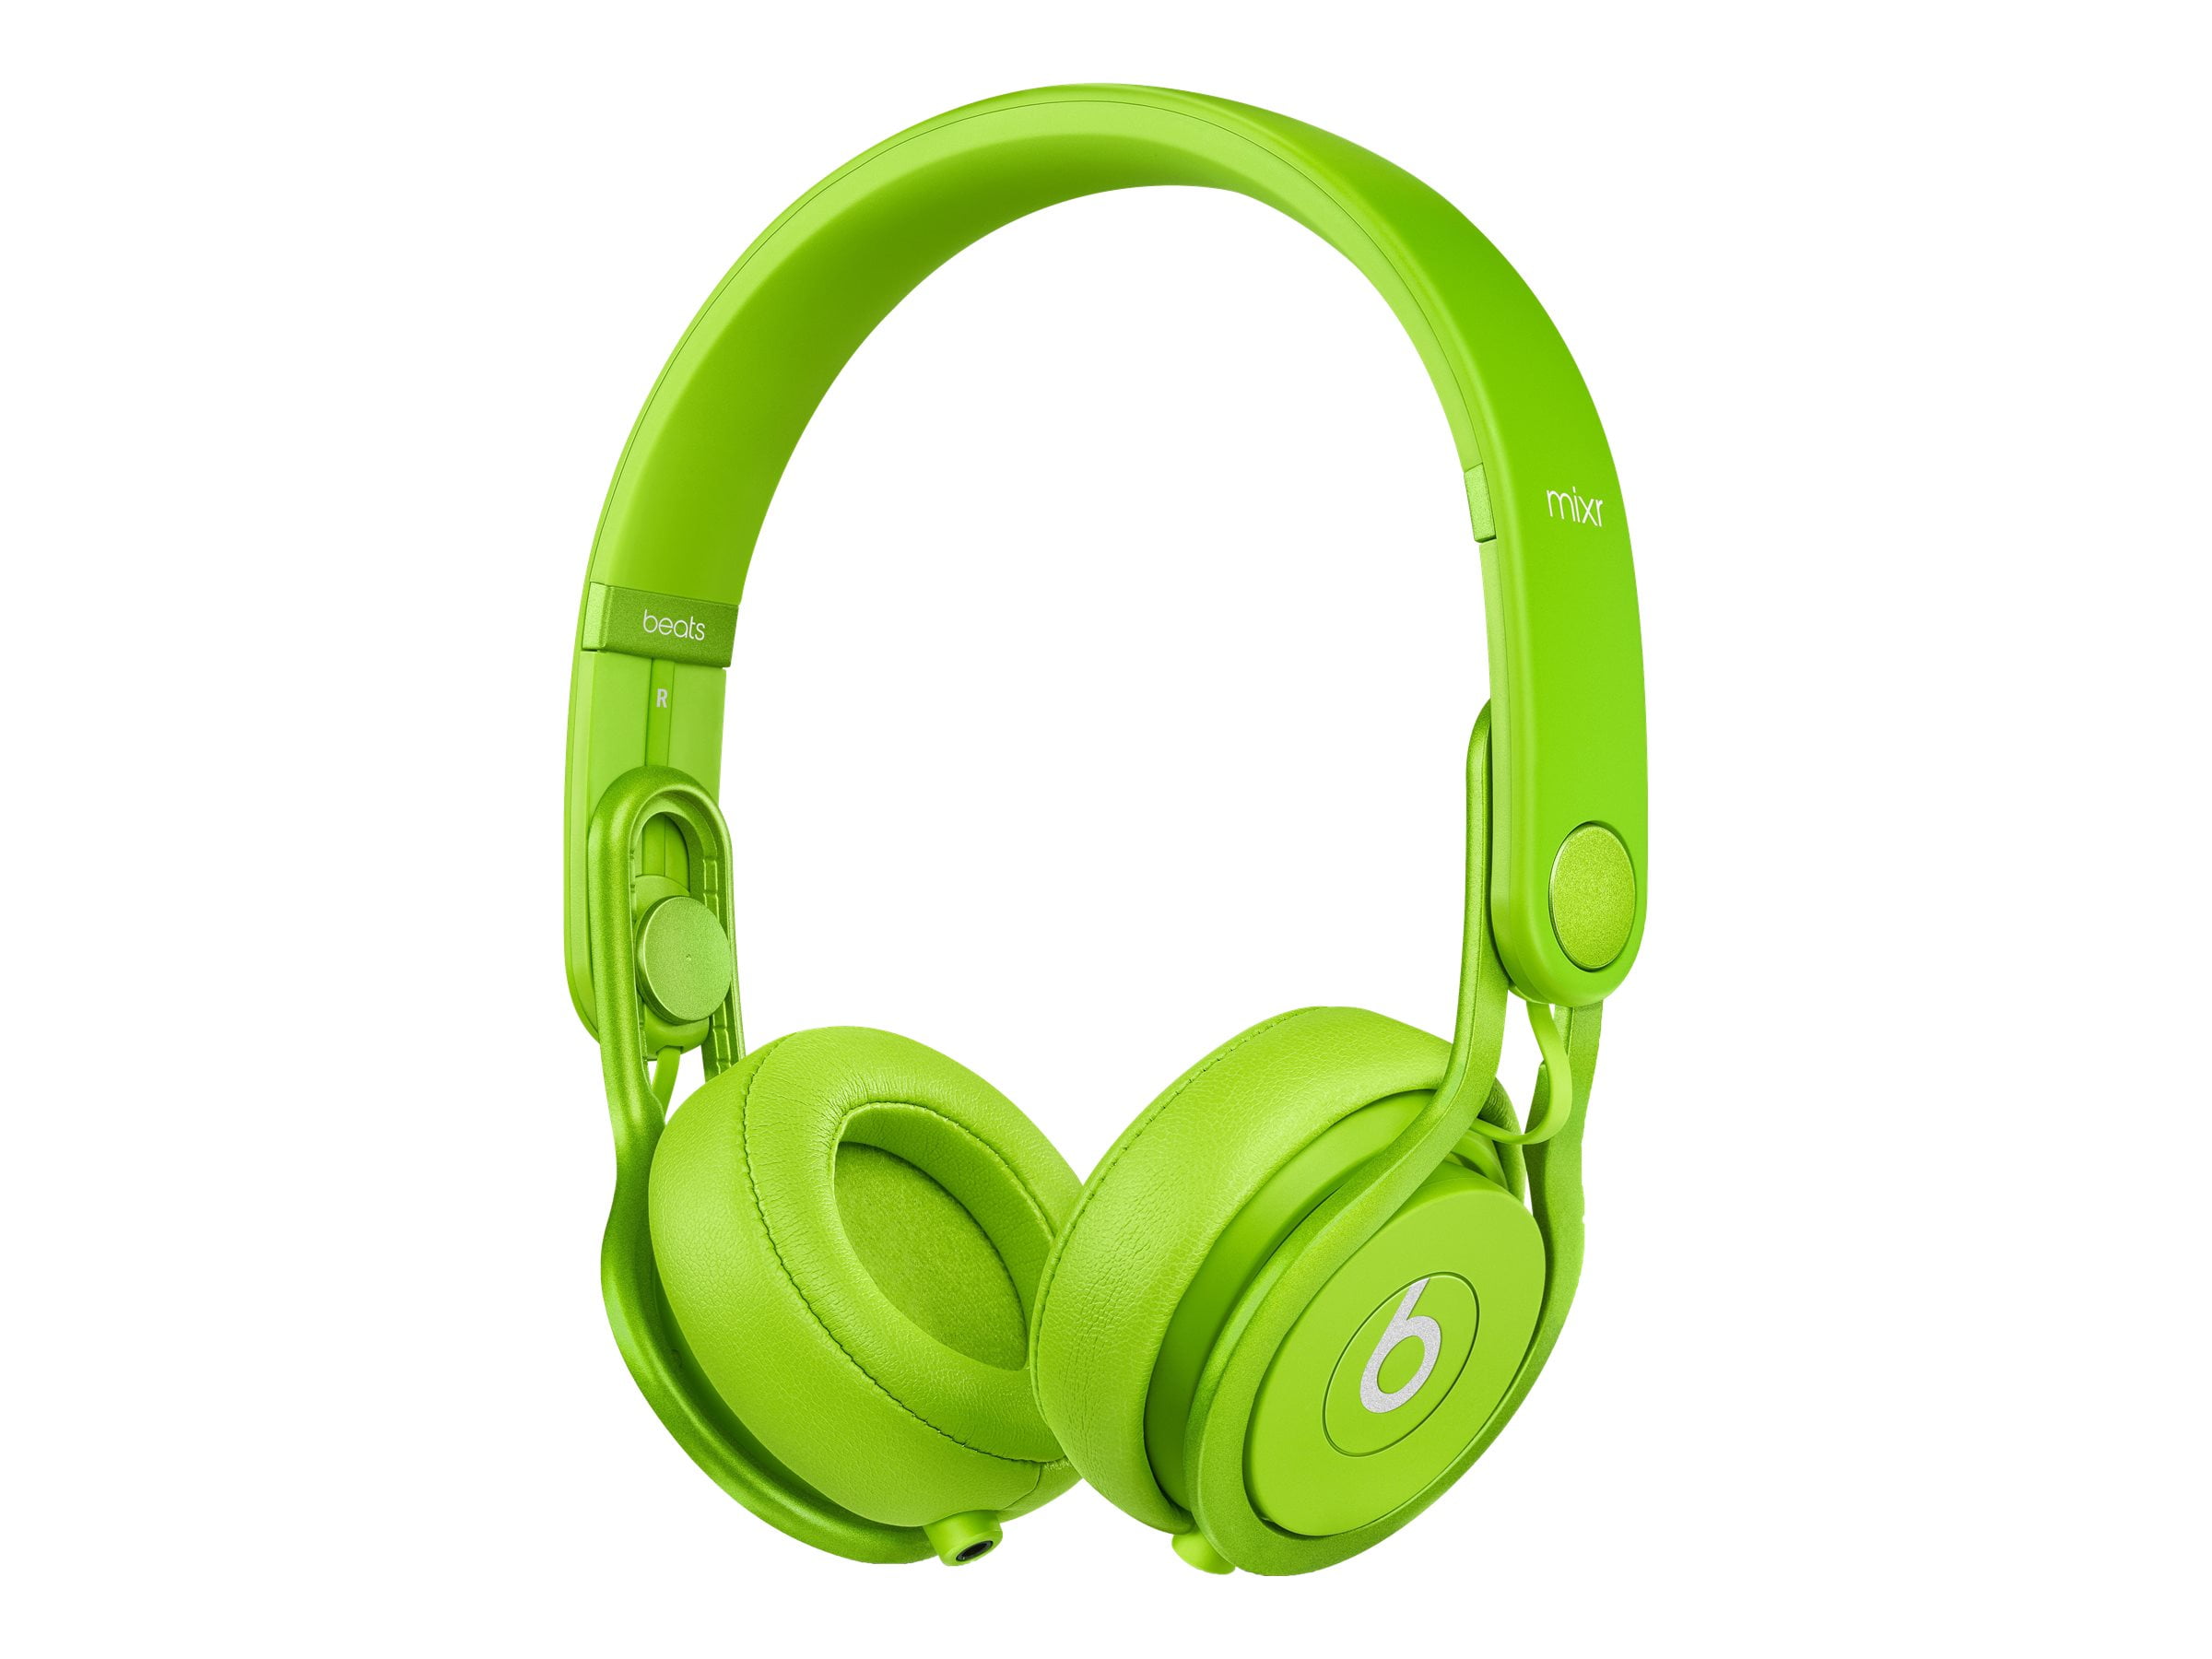 Beats by Dr. Dre Mixr High-Performance Headphones - Walmart.com